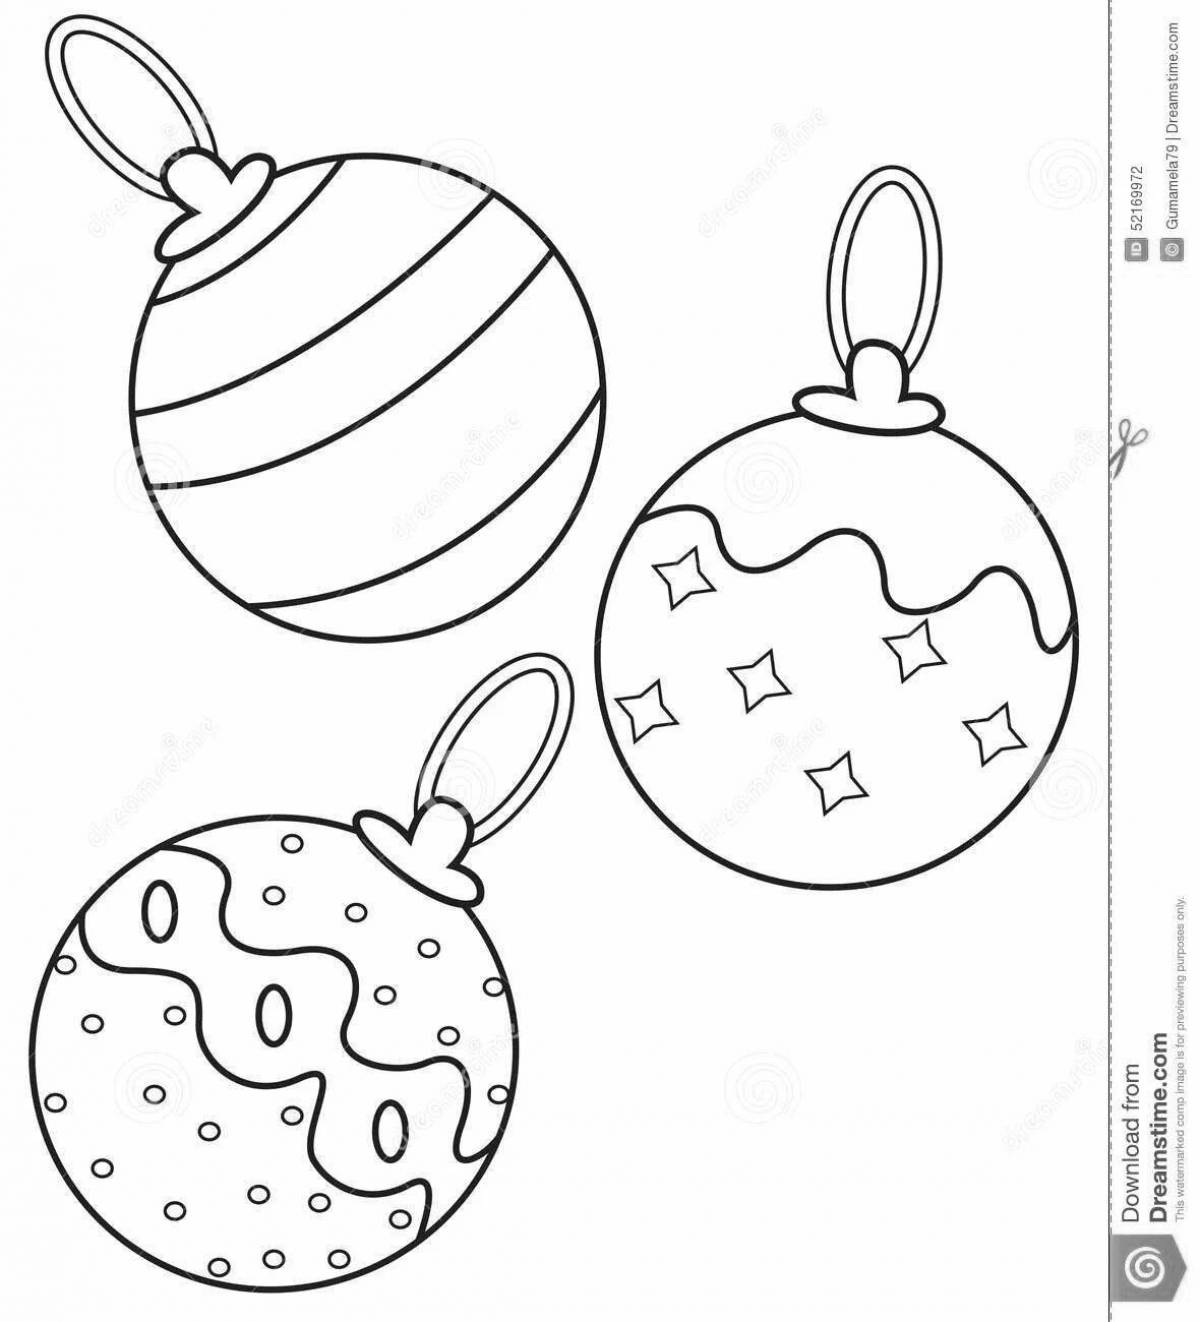 Playful christmas ball coloring page for kids